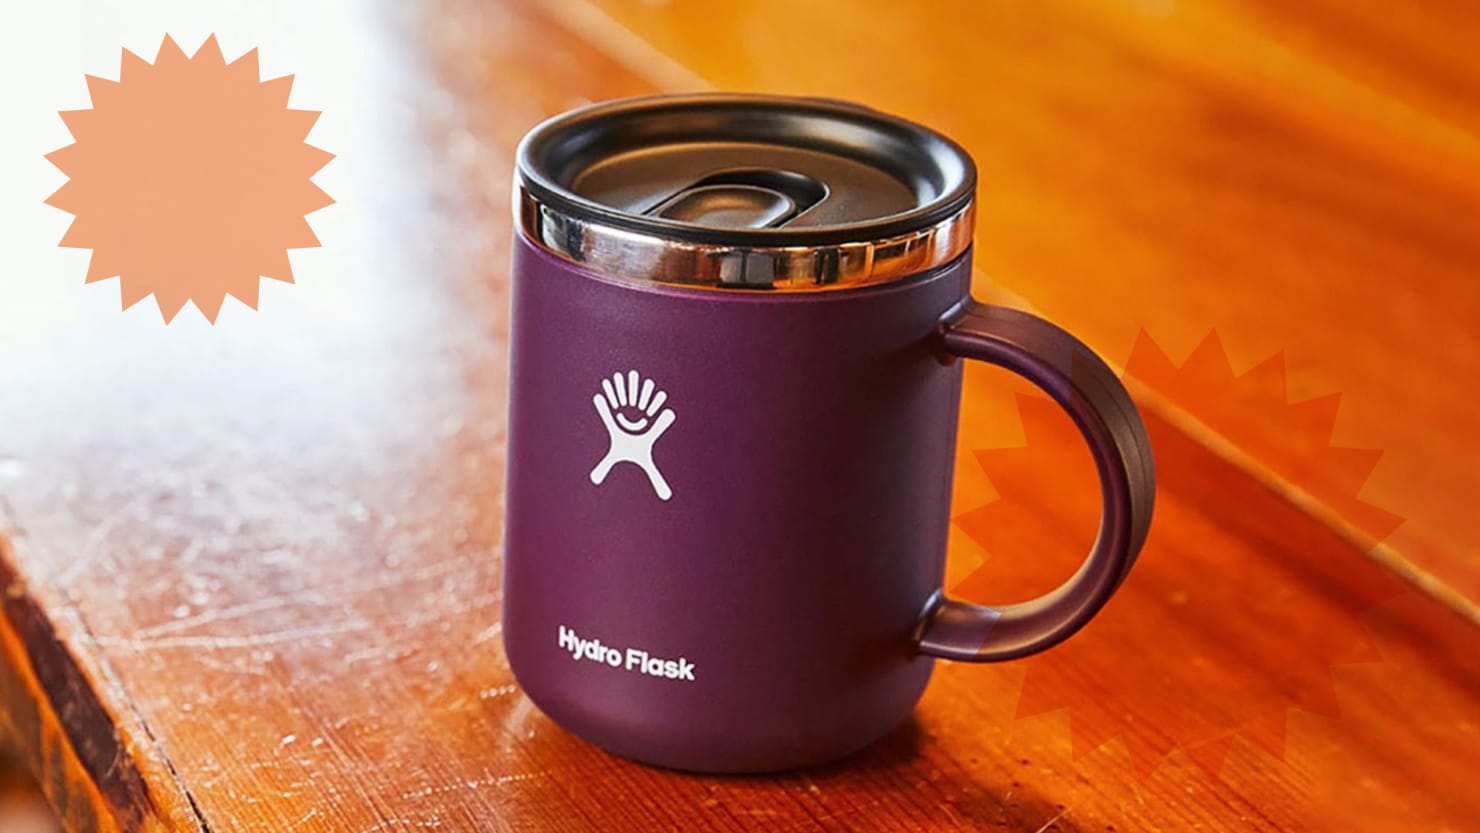 Hydro Flask 6 oz Insulated Coffee Mug, Black